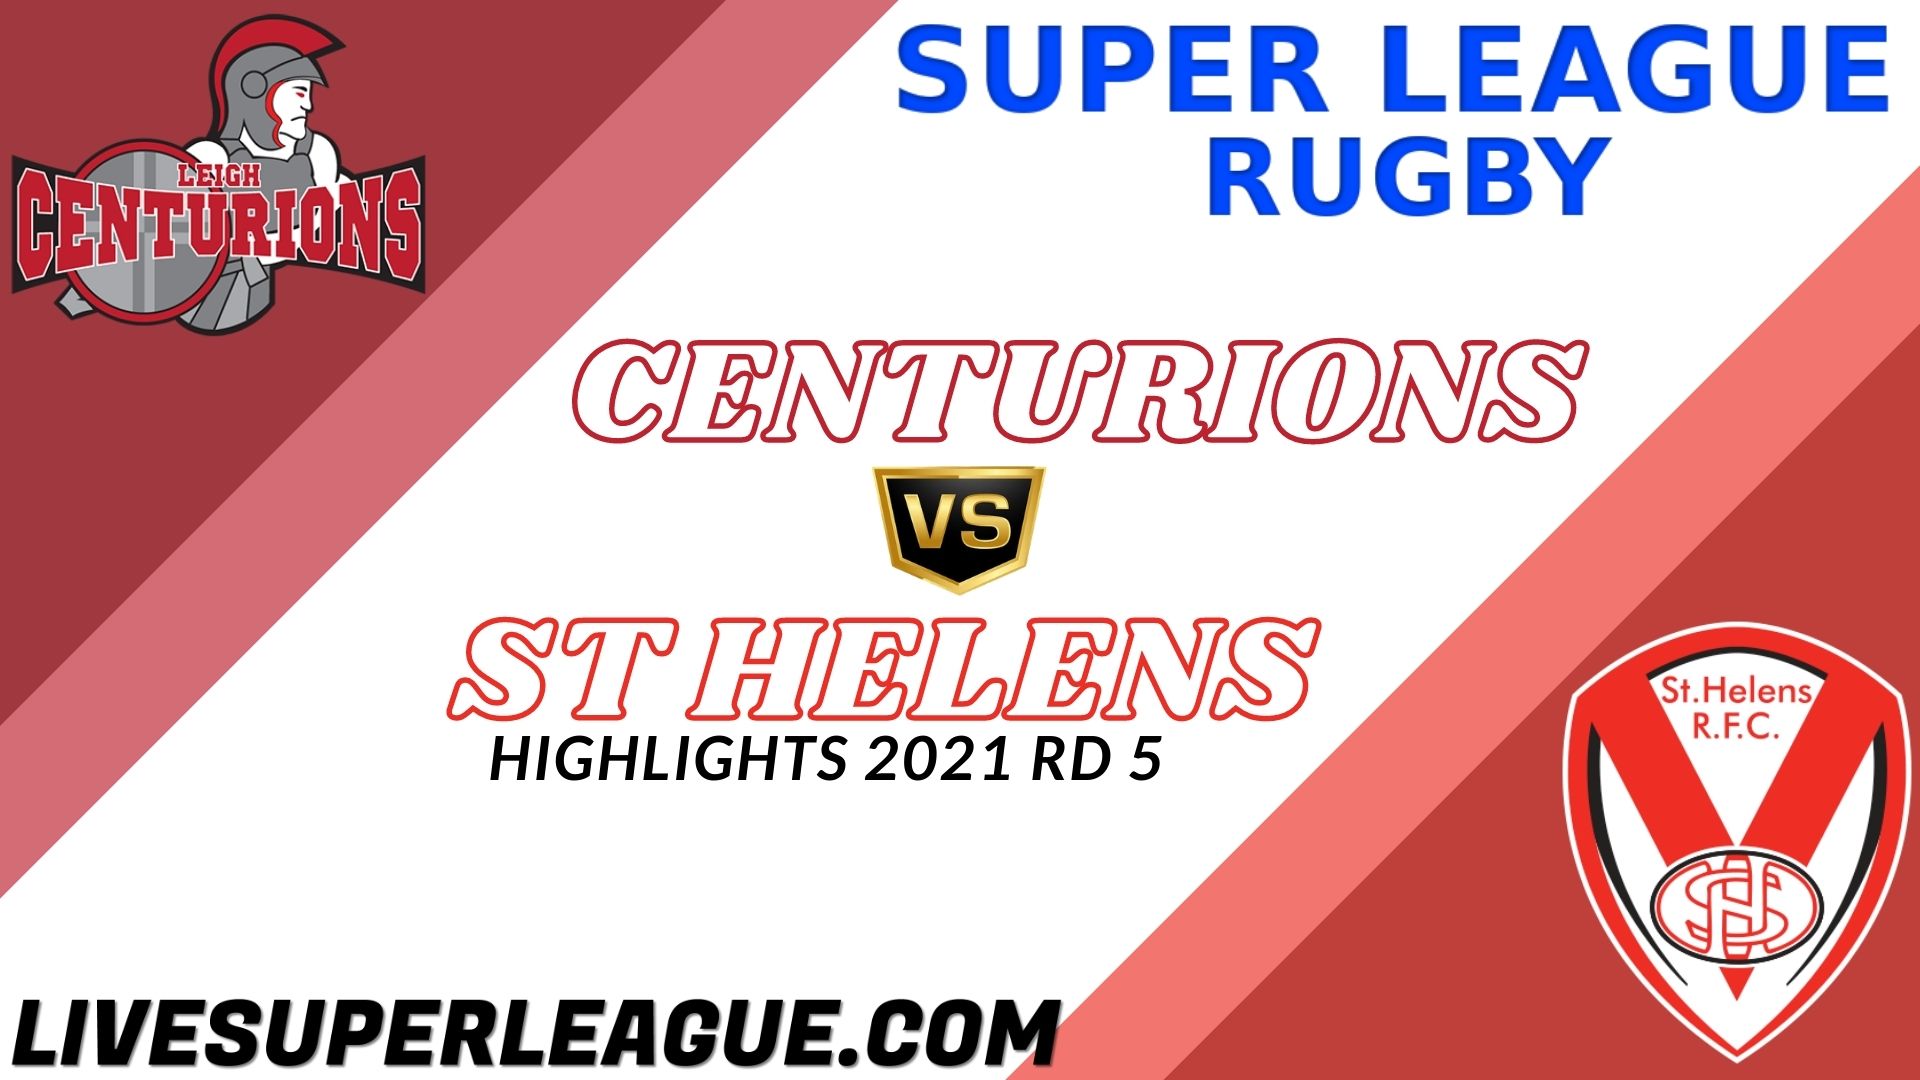 Centurions Vs St Helens Highlights 2021